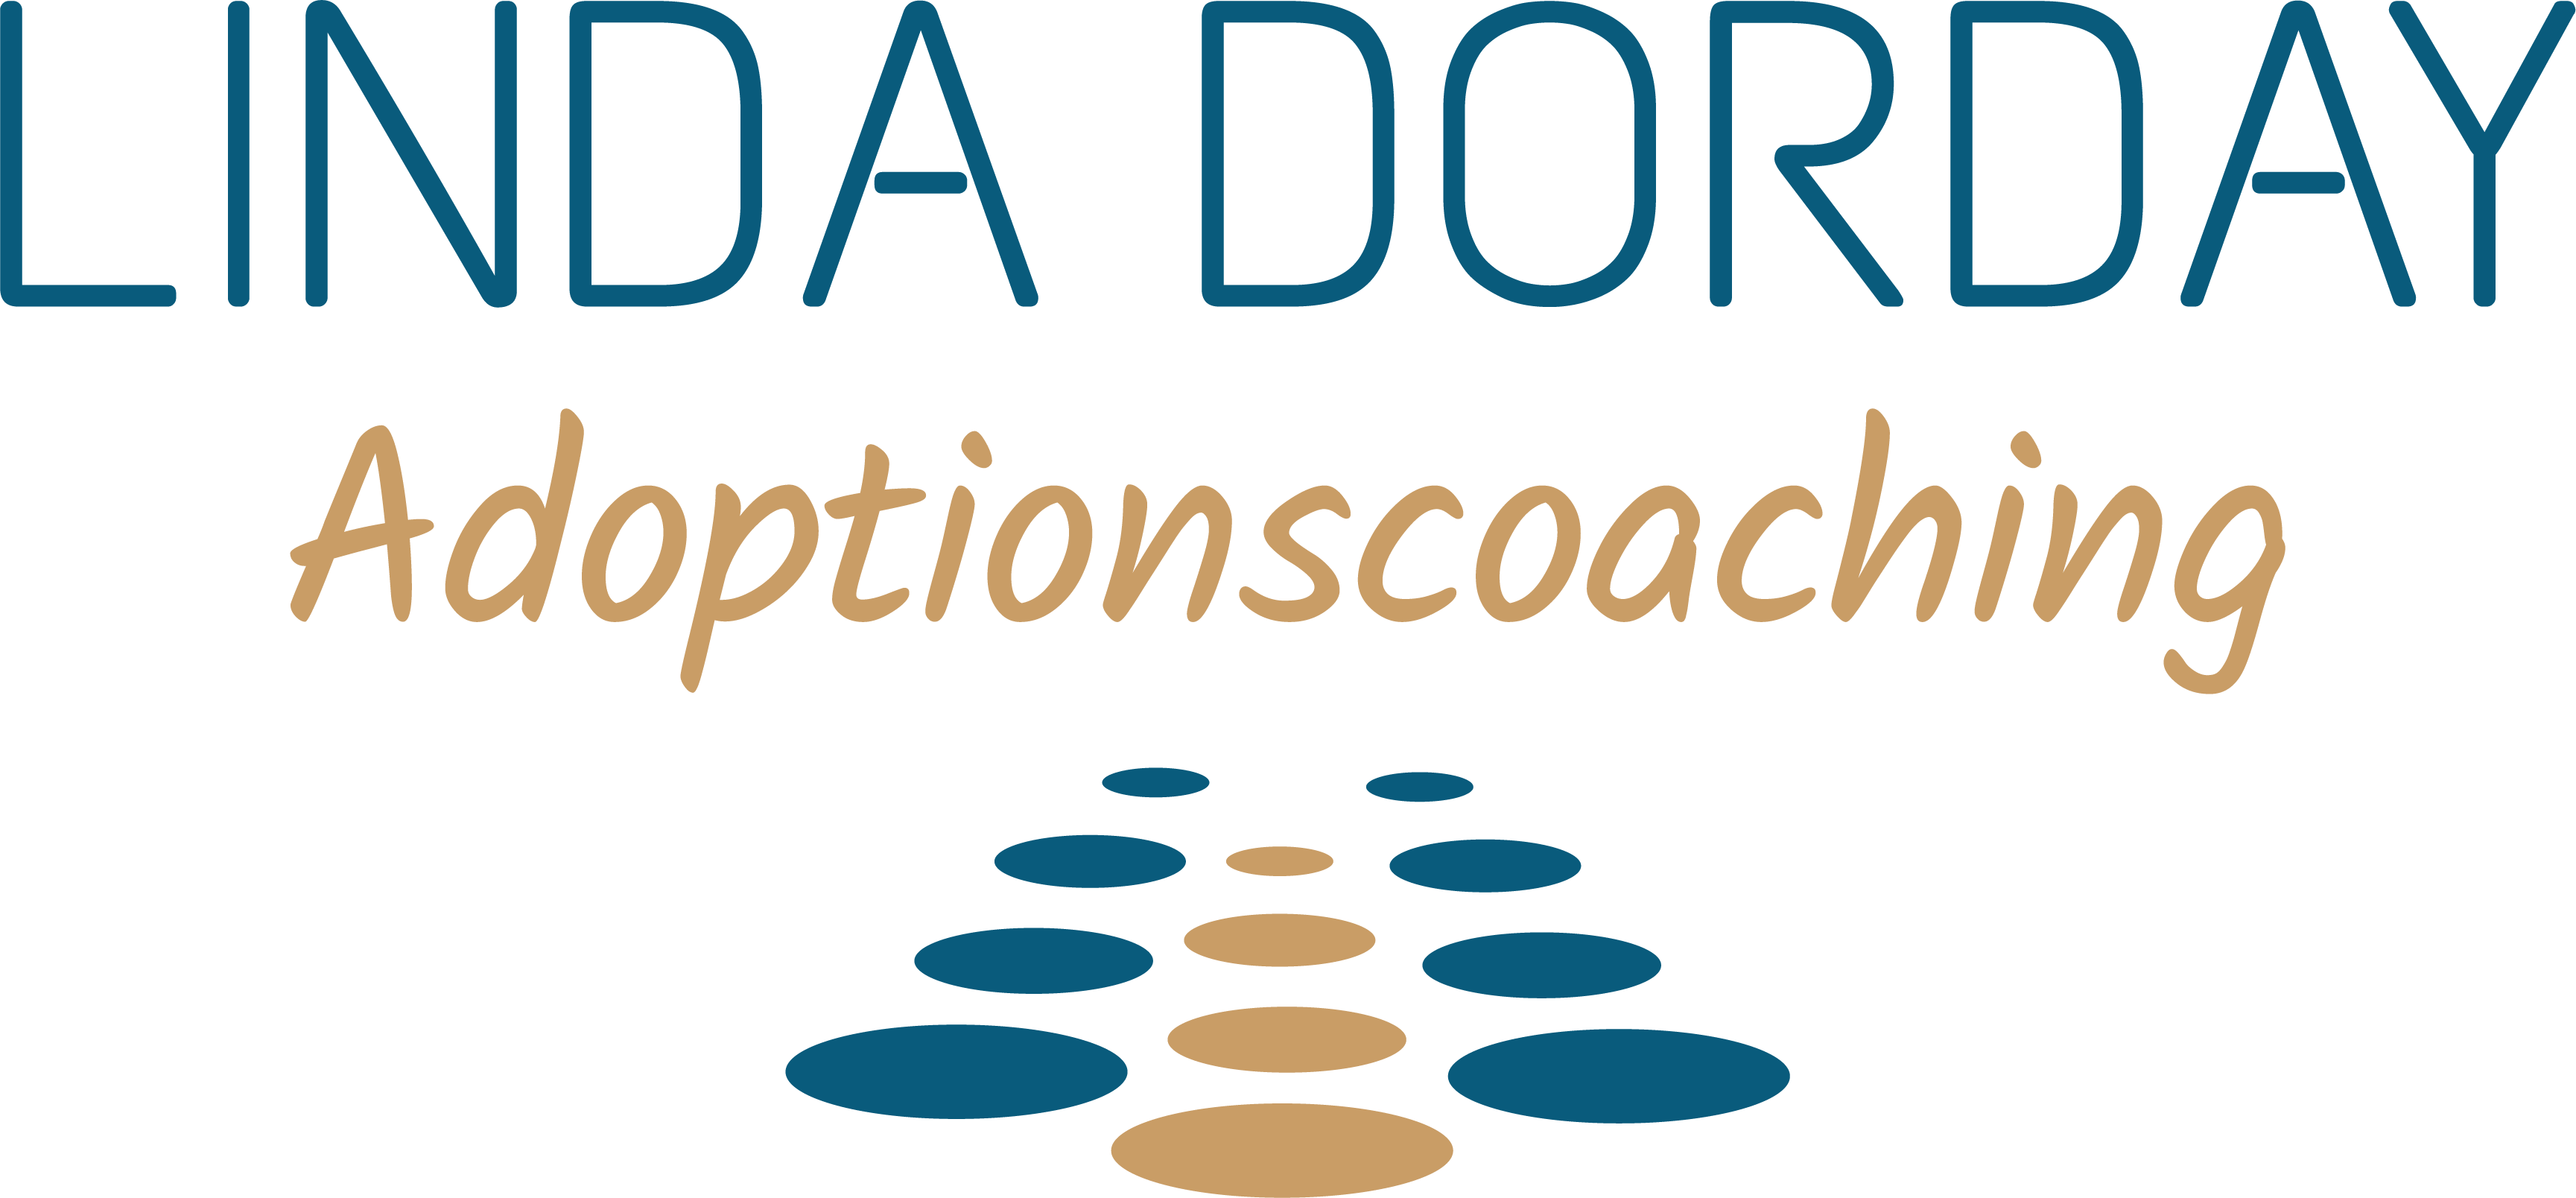 Linda Dorday Adoptionscoaching